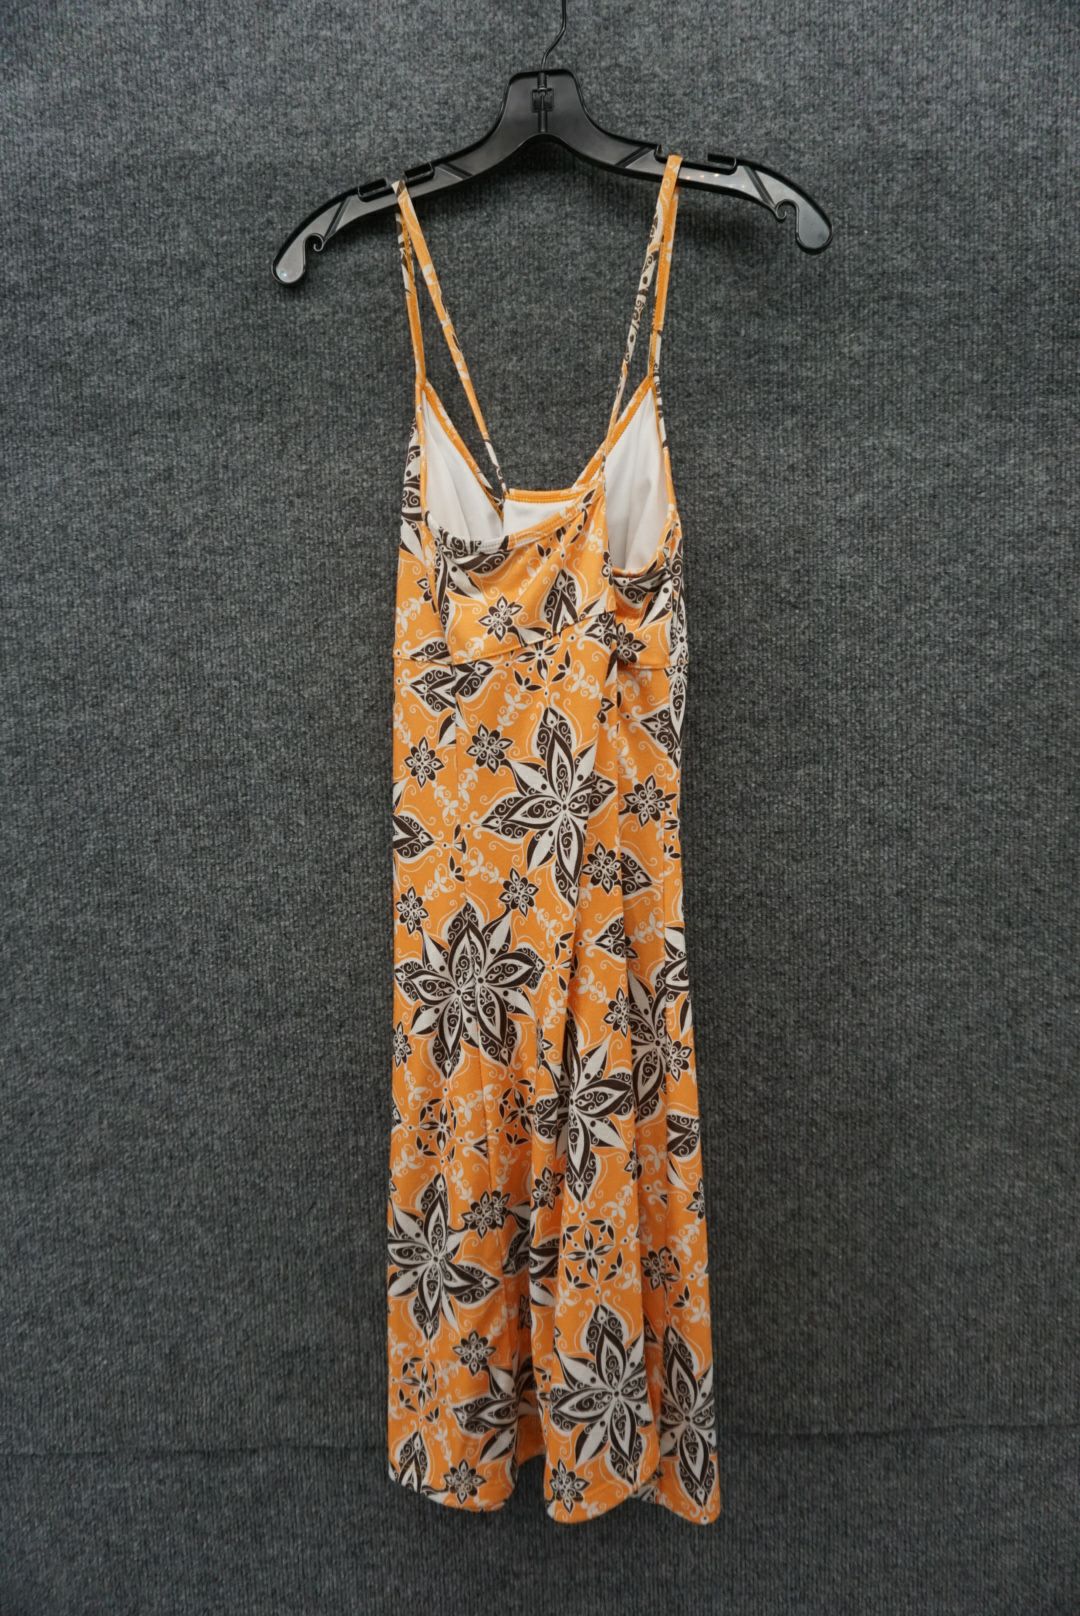 prAna Brown/Orange Size W Medium Women's Dress